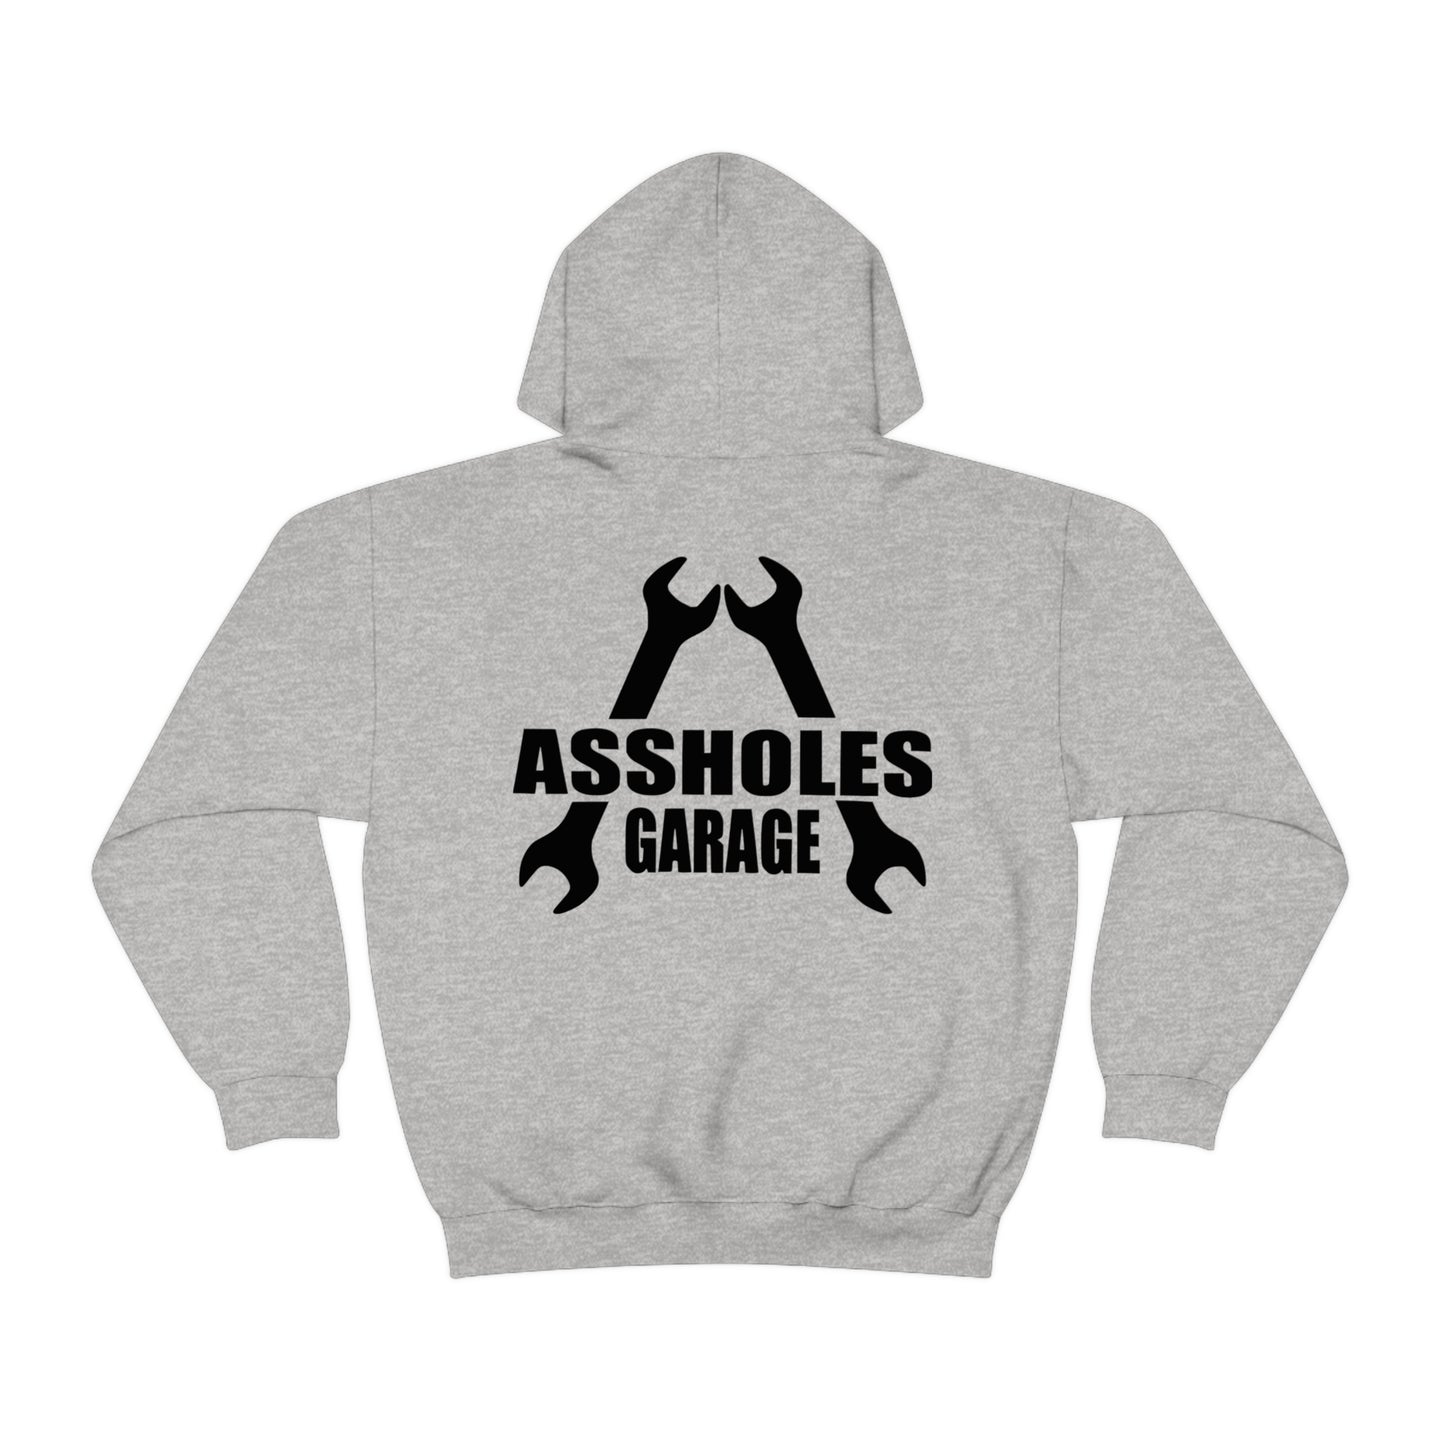 Asshole's Garage Hoodie